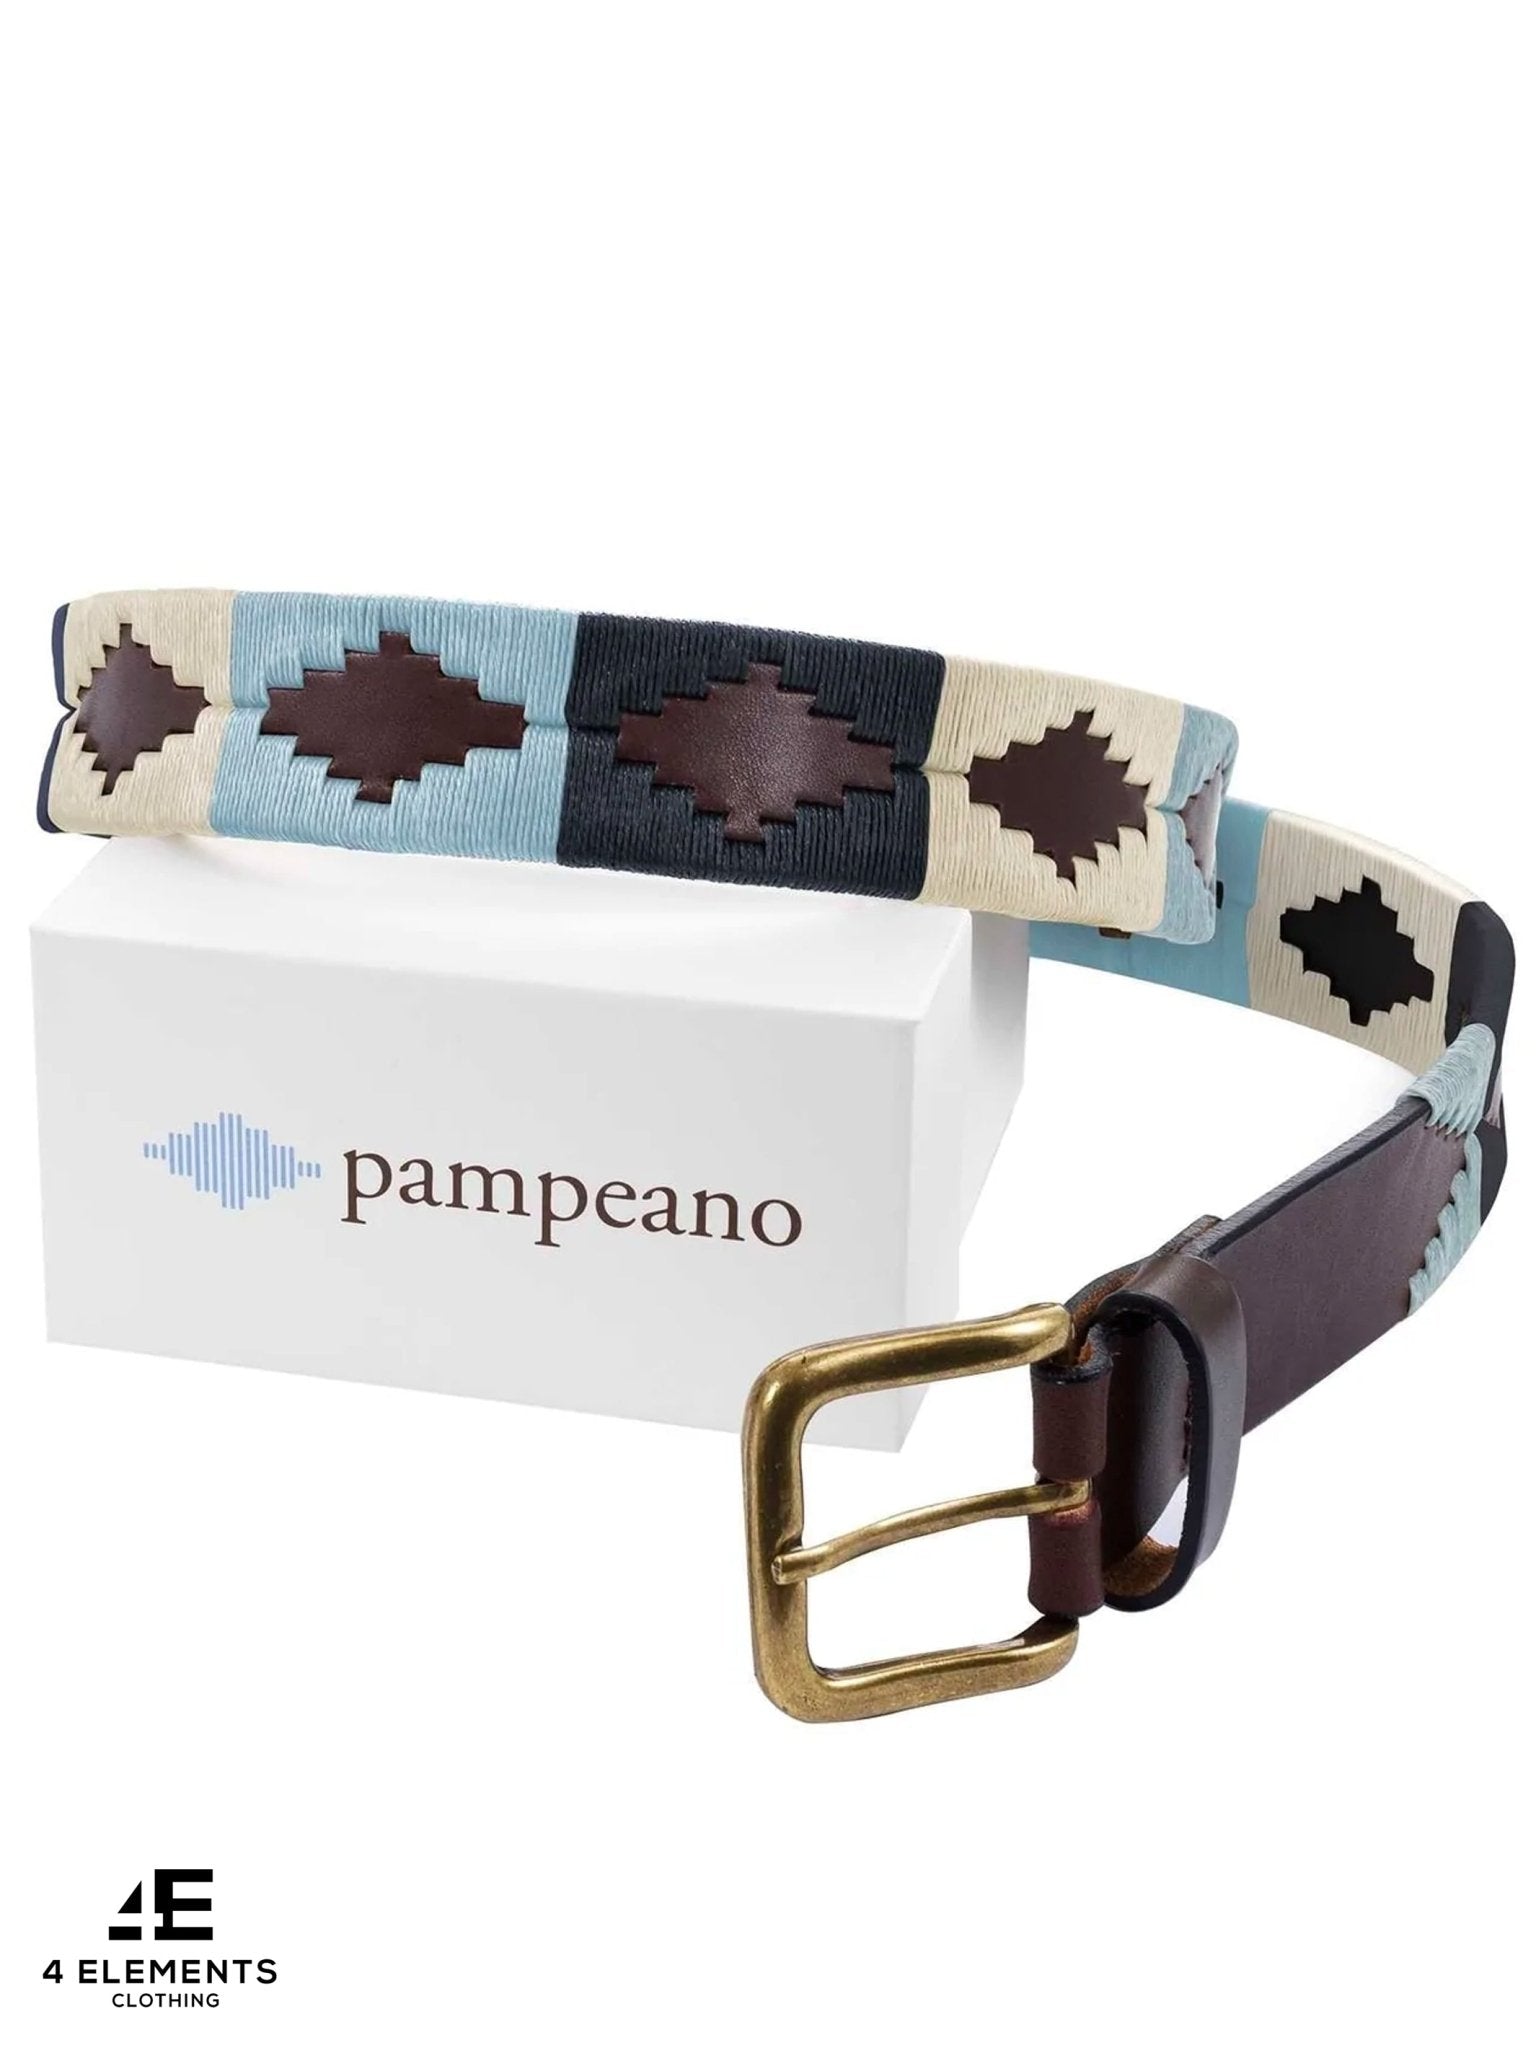 4elementsclothingPampeanoPampeano - Polo Belt - 'Sereno' Mens BeltBelts5060477650134 - 85